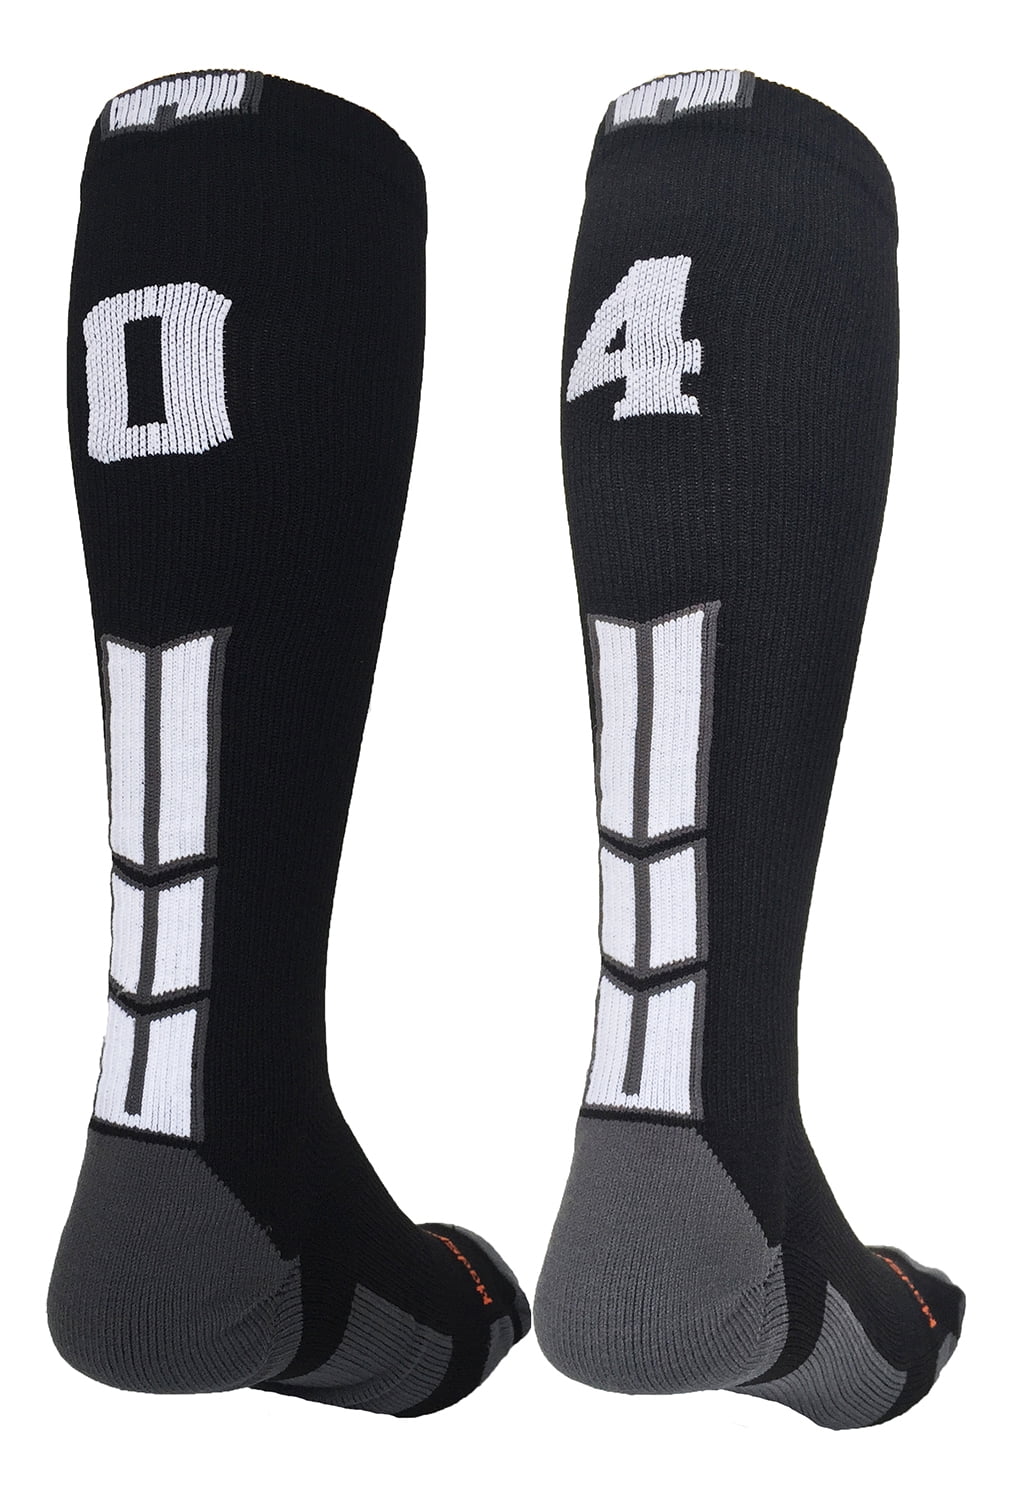 Pair Black/White Player Id Custom Over The Calf Number Socks 